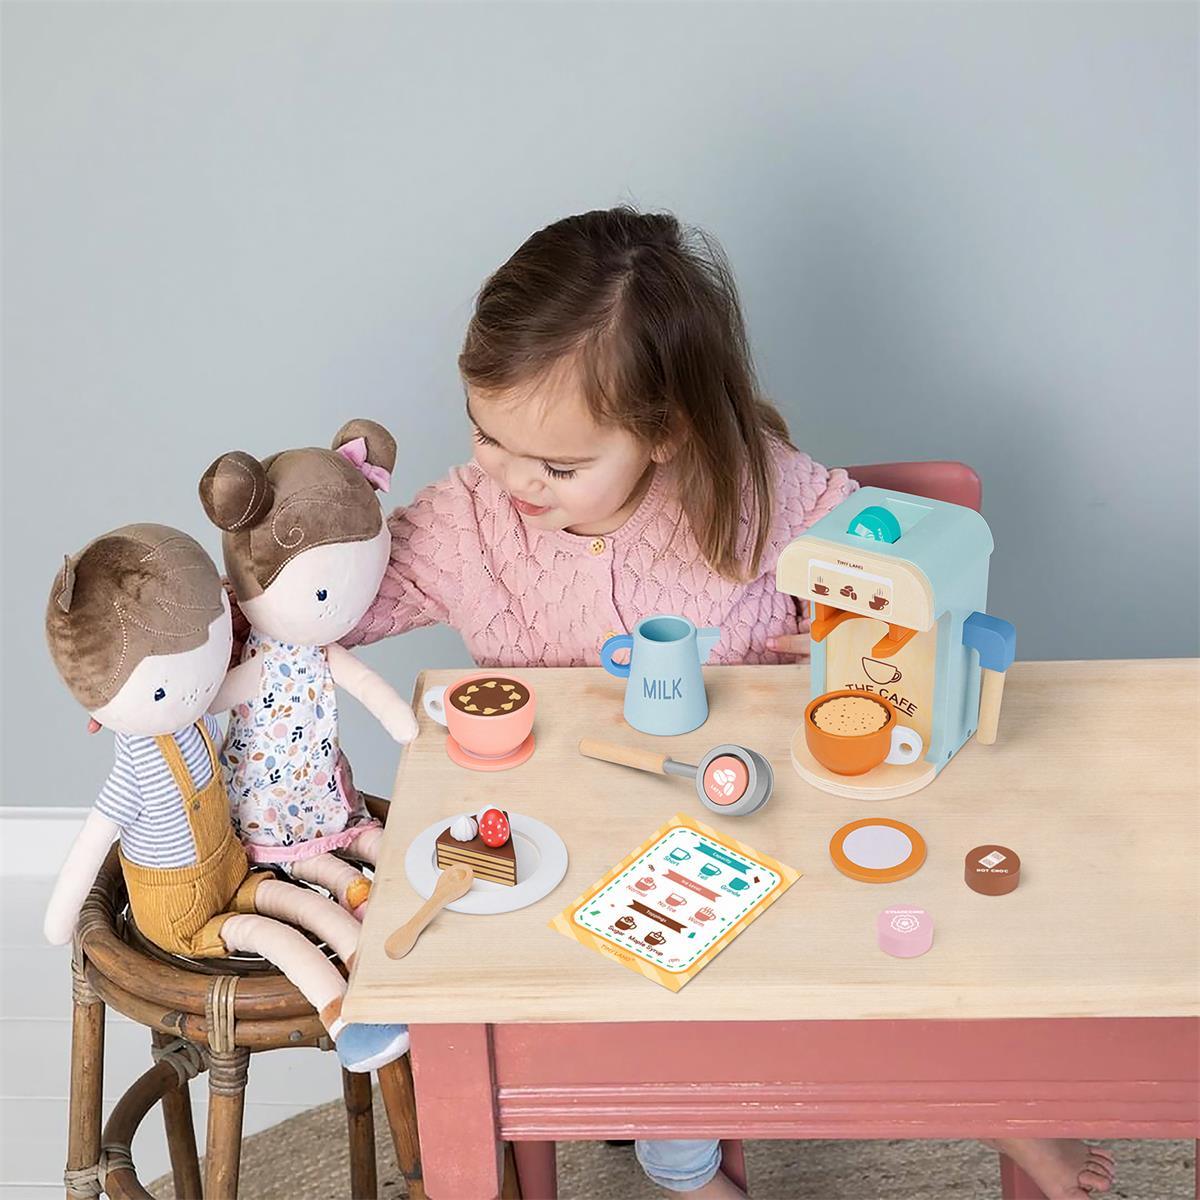 Tiny Land® Wooden Kids Play Coffee Maker Set